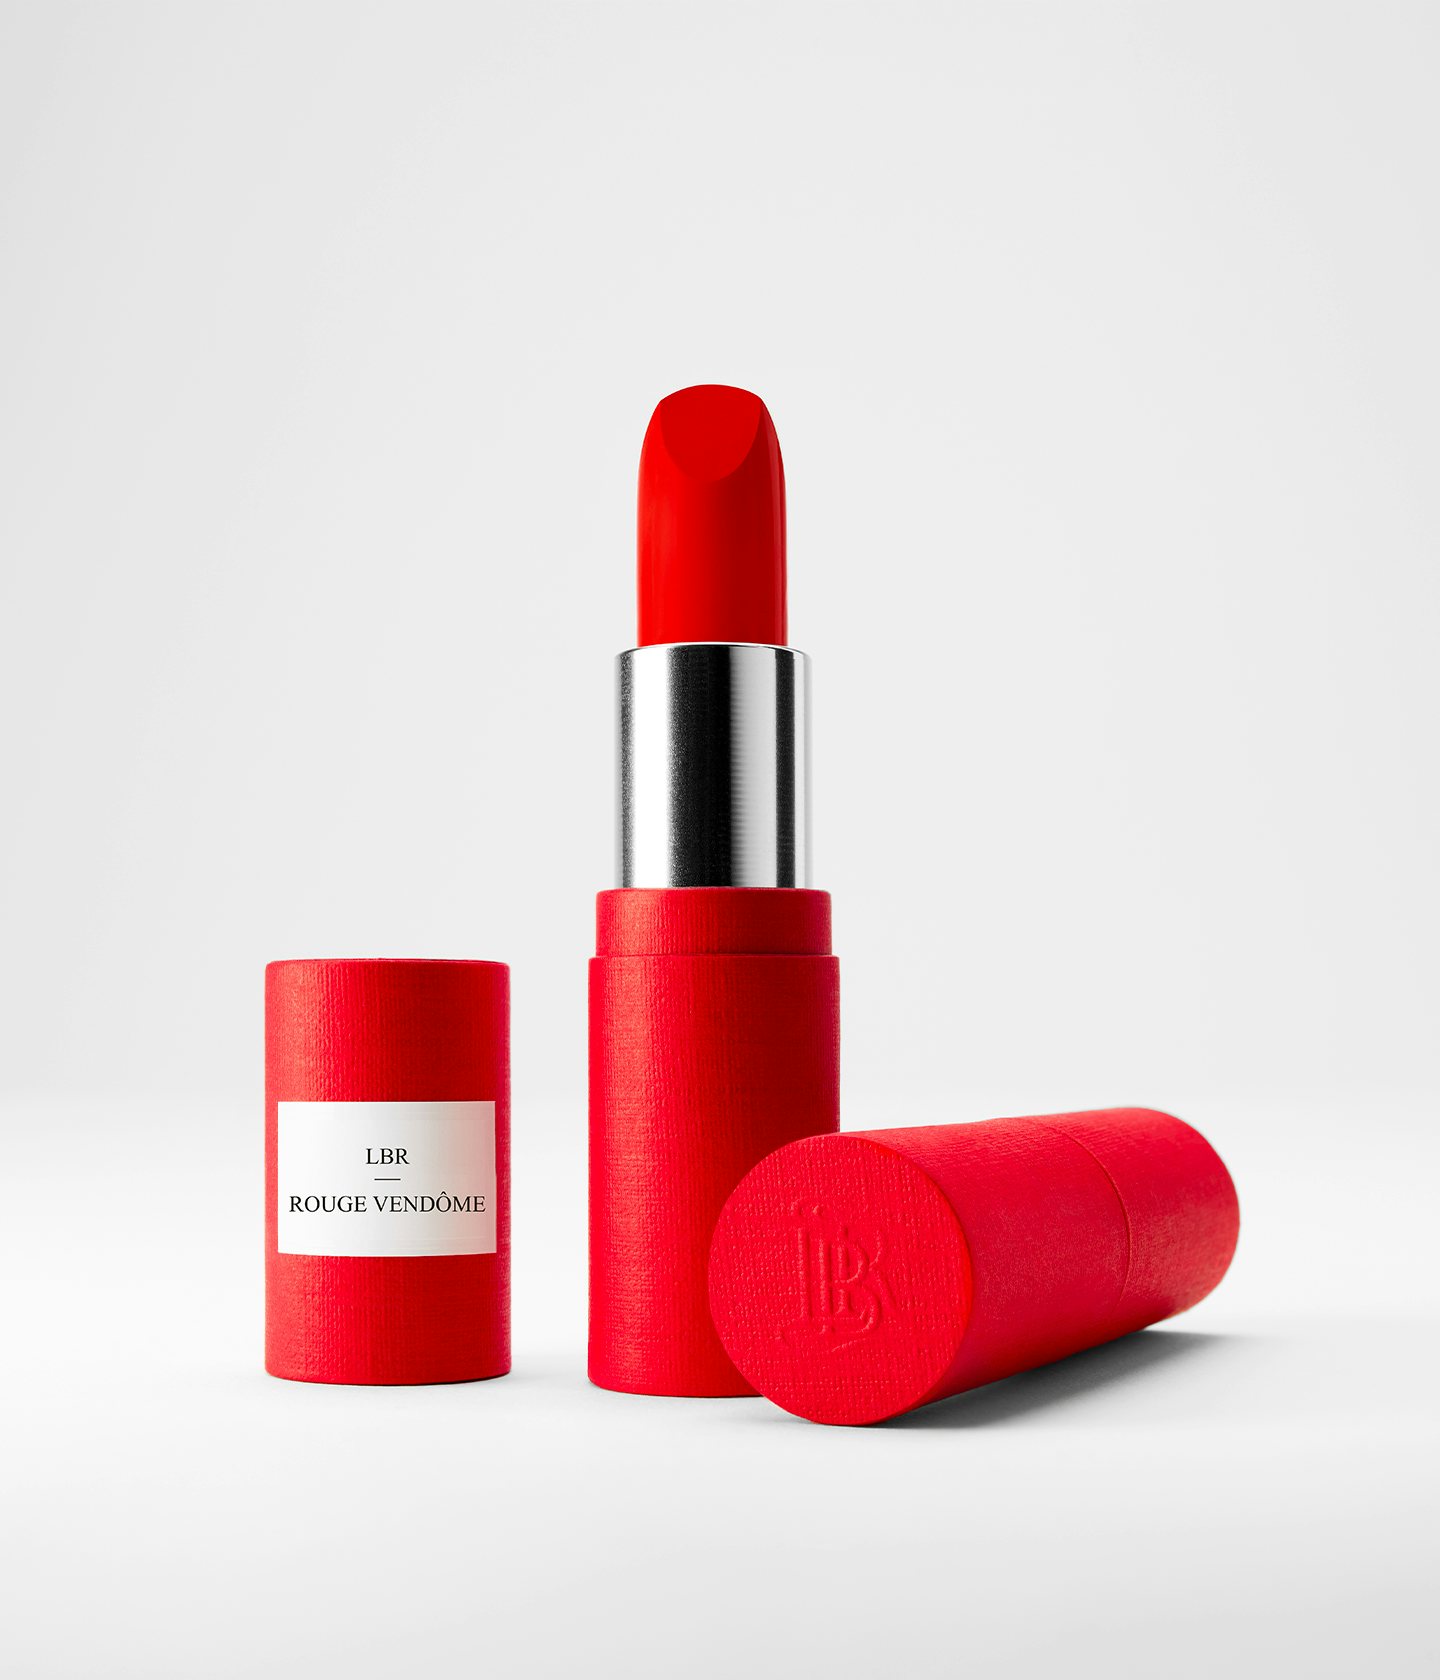 La bouche rouge Rouge Vendôme lipstick in the red paper case